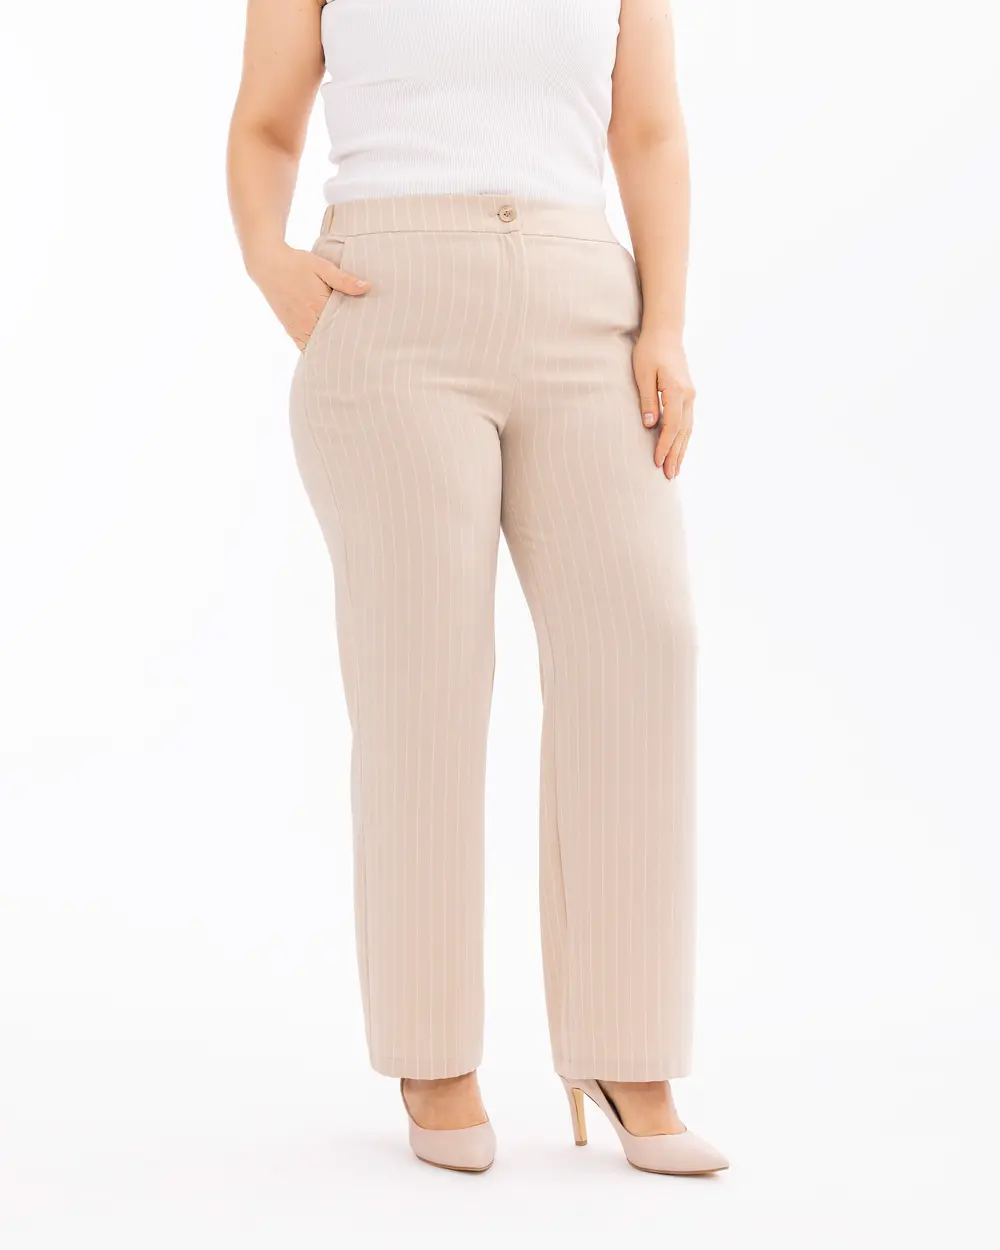 Plus Size Striped Zipper Detailed Pants